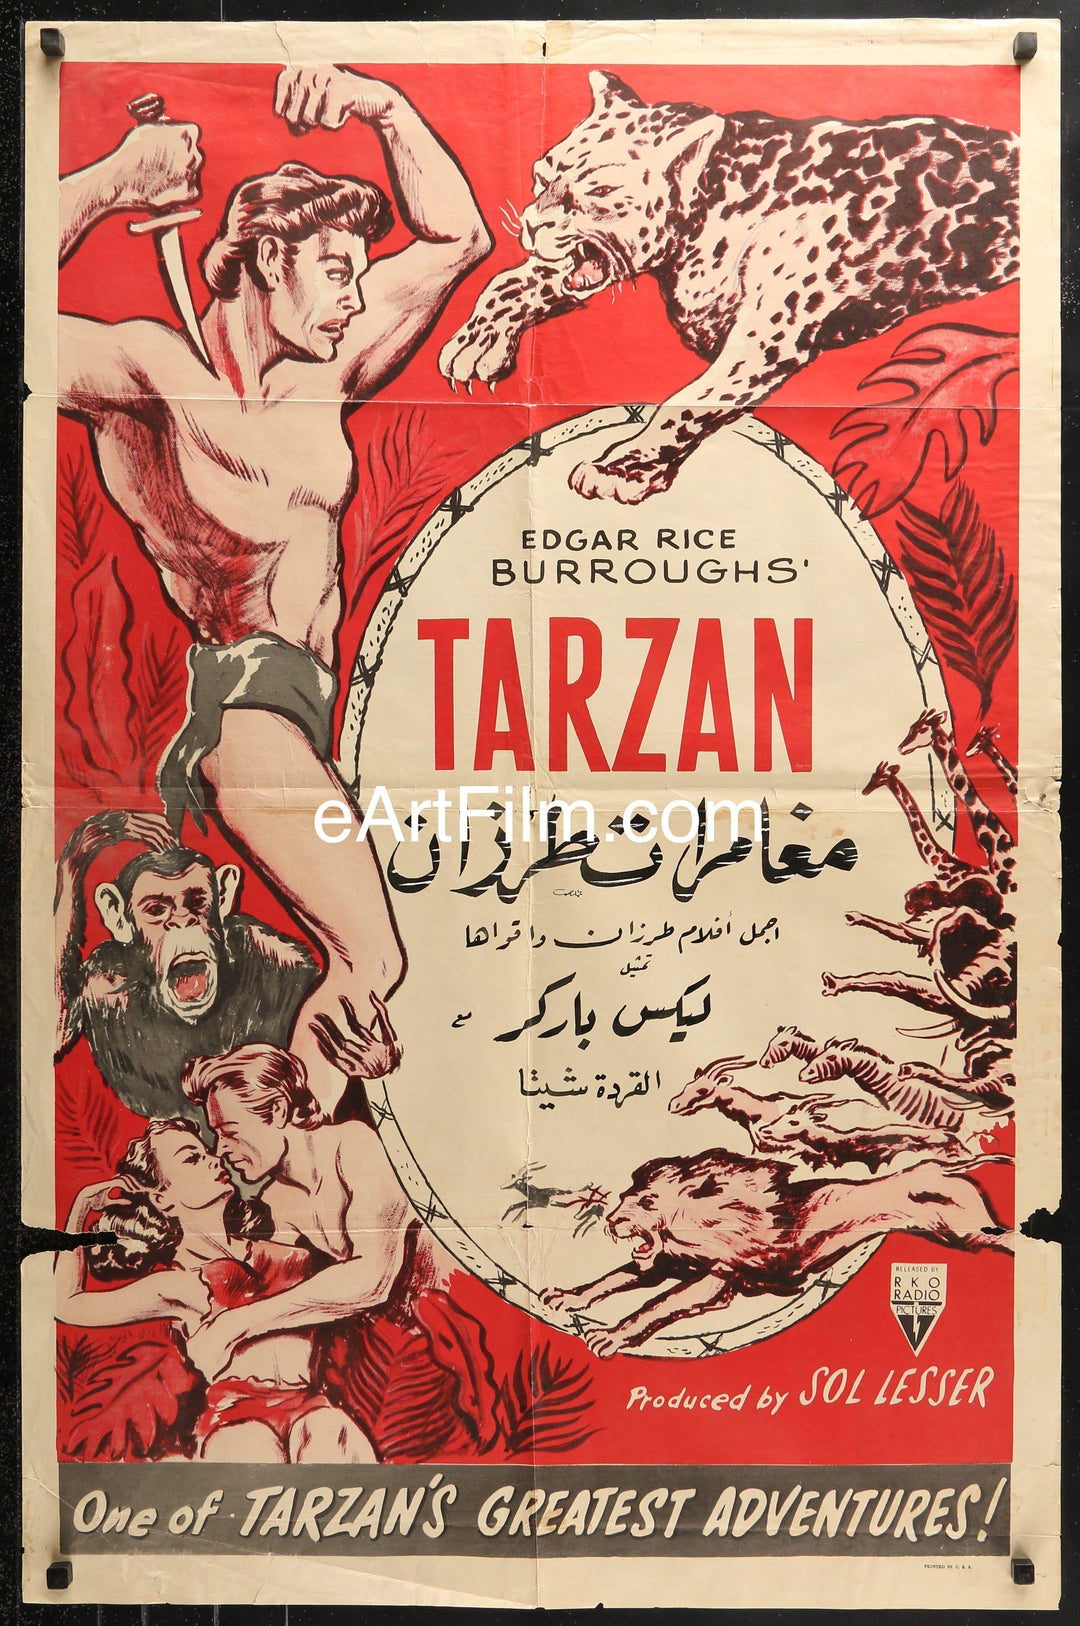 eArtFilm.com U.S One Sheet (27"x41") Tarzan stock poster by RKO 1950s 27x41 One of Tarzan's greatest adventures!